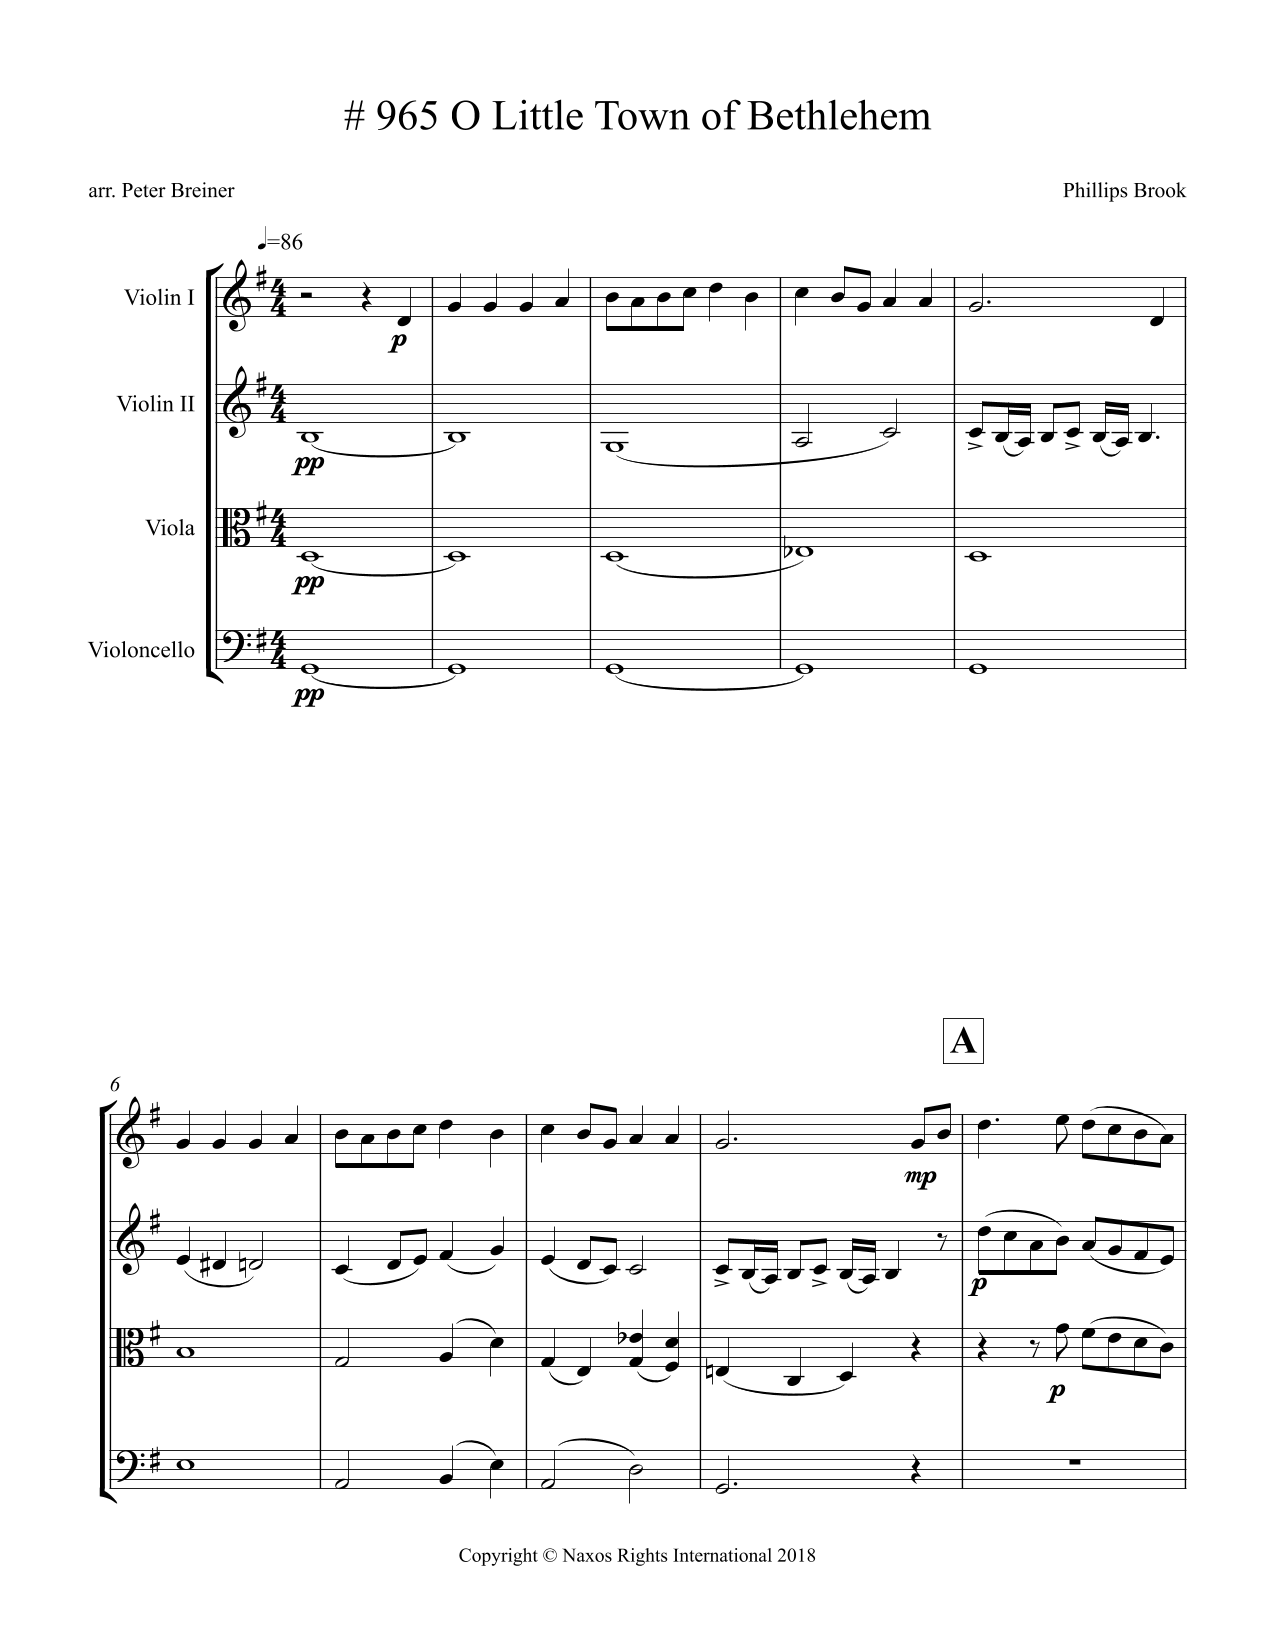 Little Town of Bethlehem – Arrangement for String Quartet by Peter Breiner (PB076)